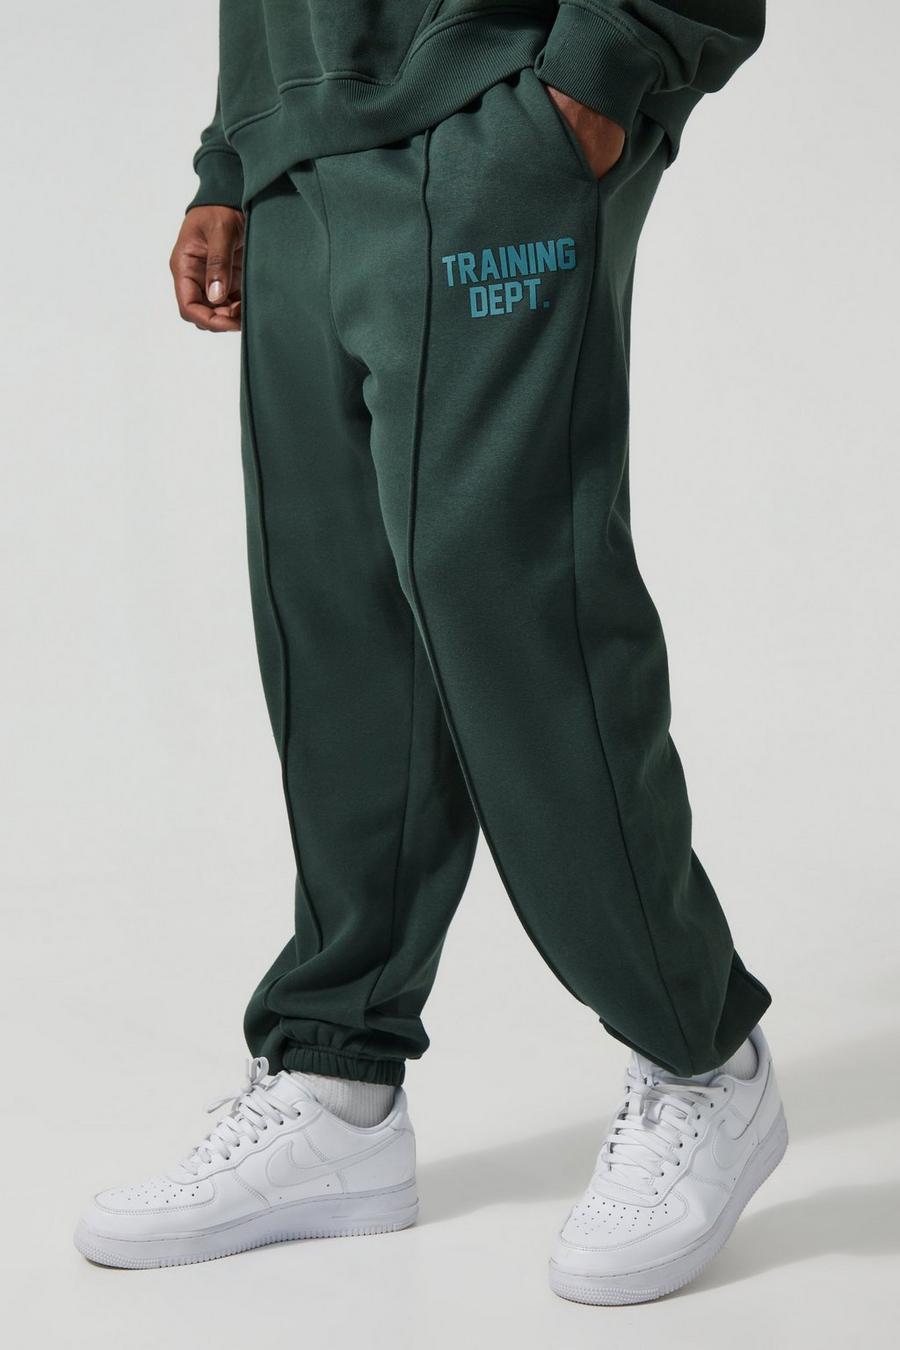 Pantaloni tuta Plus Size Active Training Dept Slim Fit, Dark green image number 1